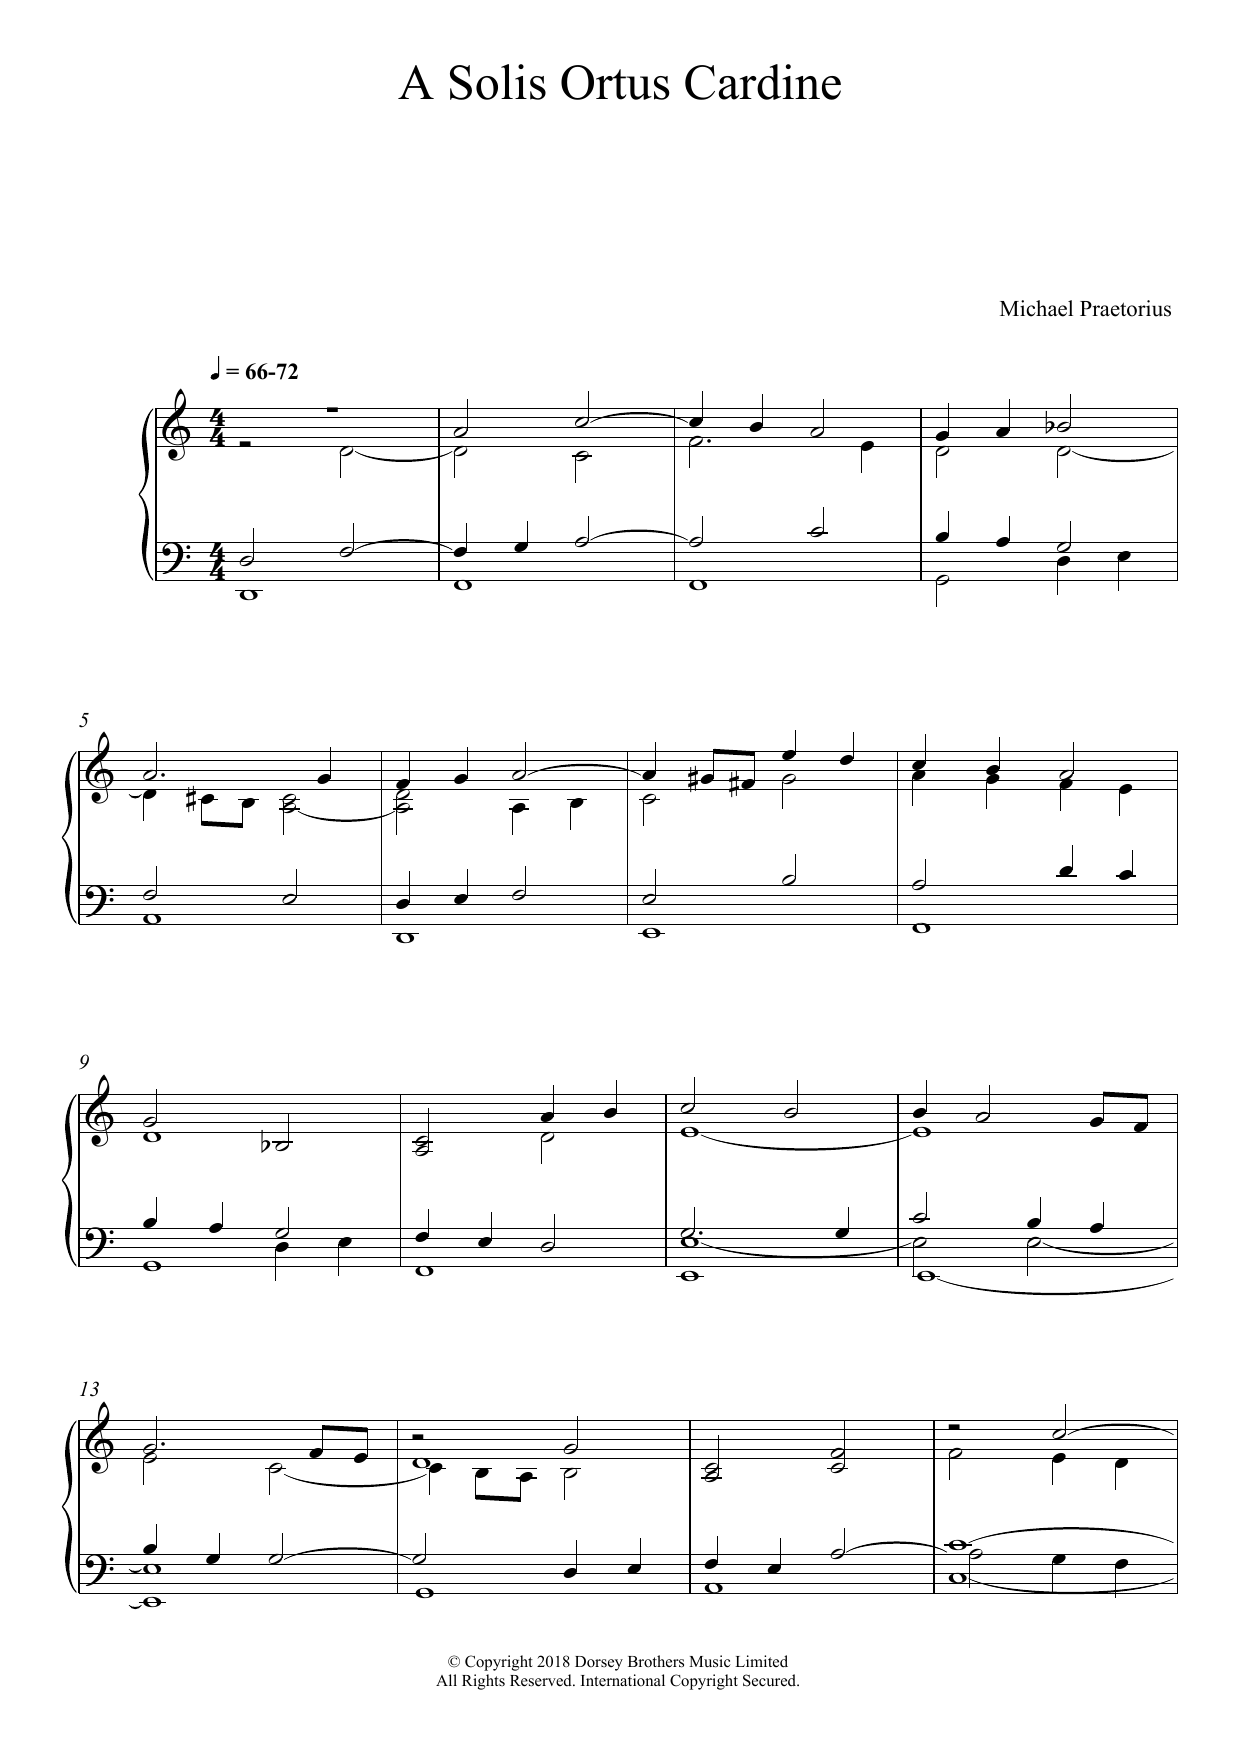 Download Michael Praetorius A Solis Ortus Cardine Sheet Music